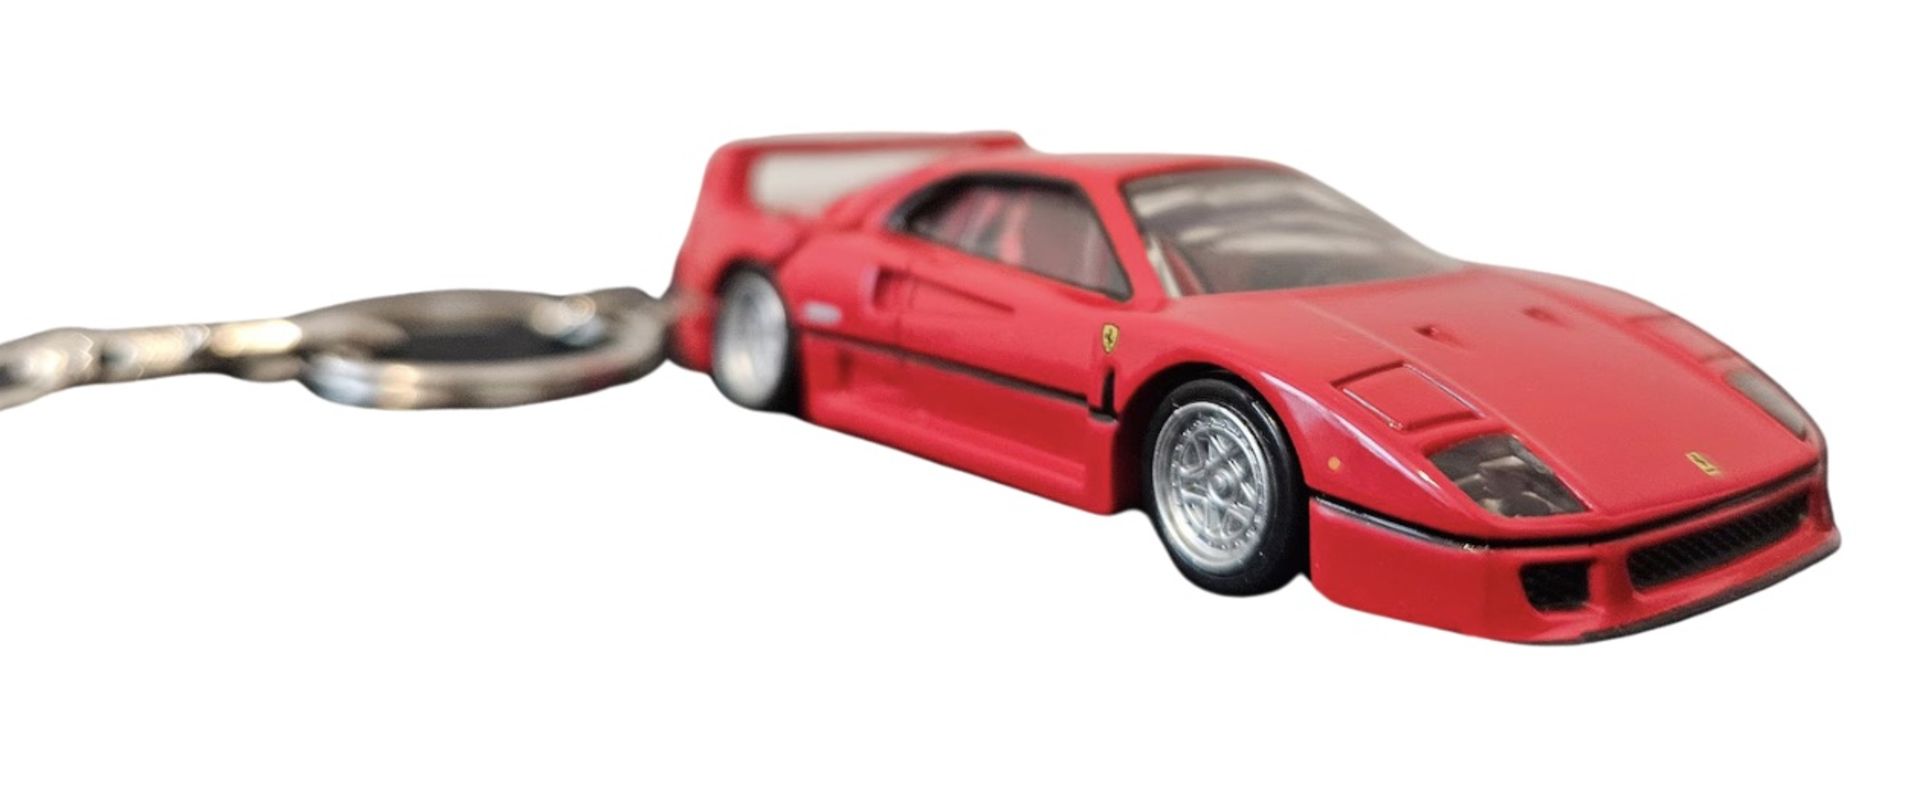 Ferrari F40 Keychain - Image 5 of 5